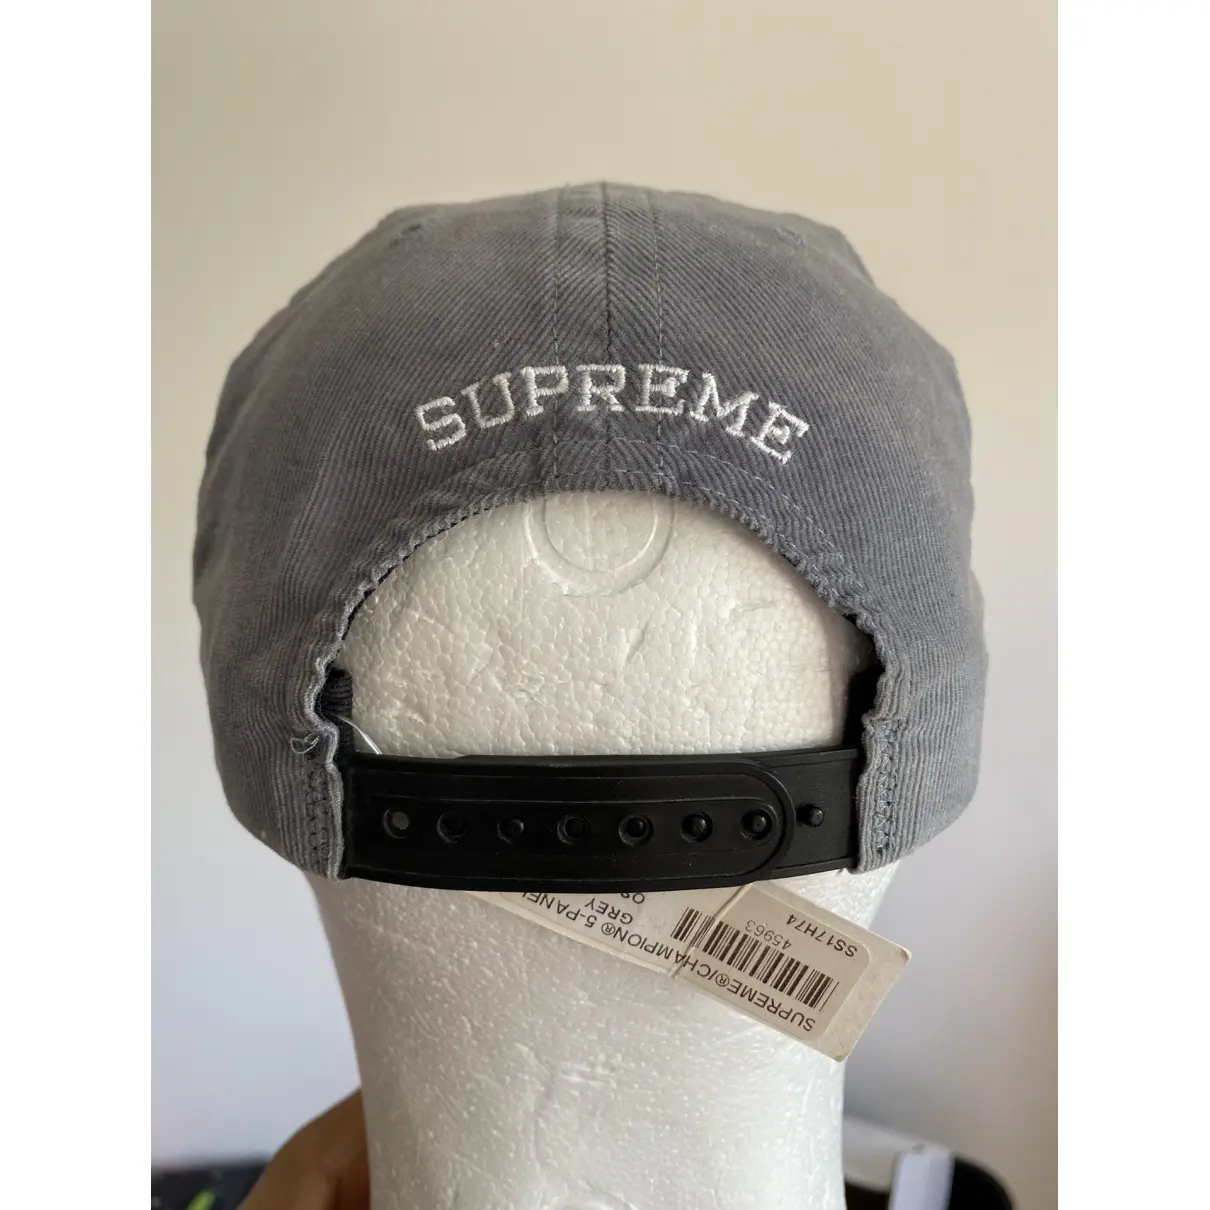 Hat Supreme x Champion